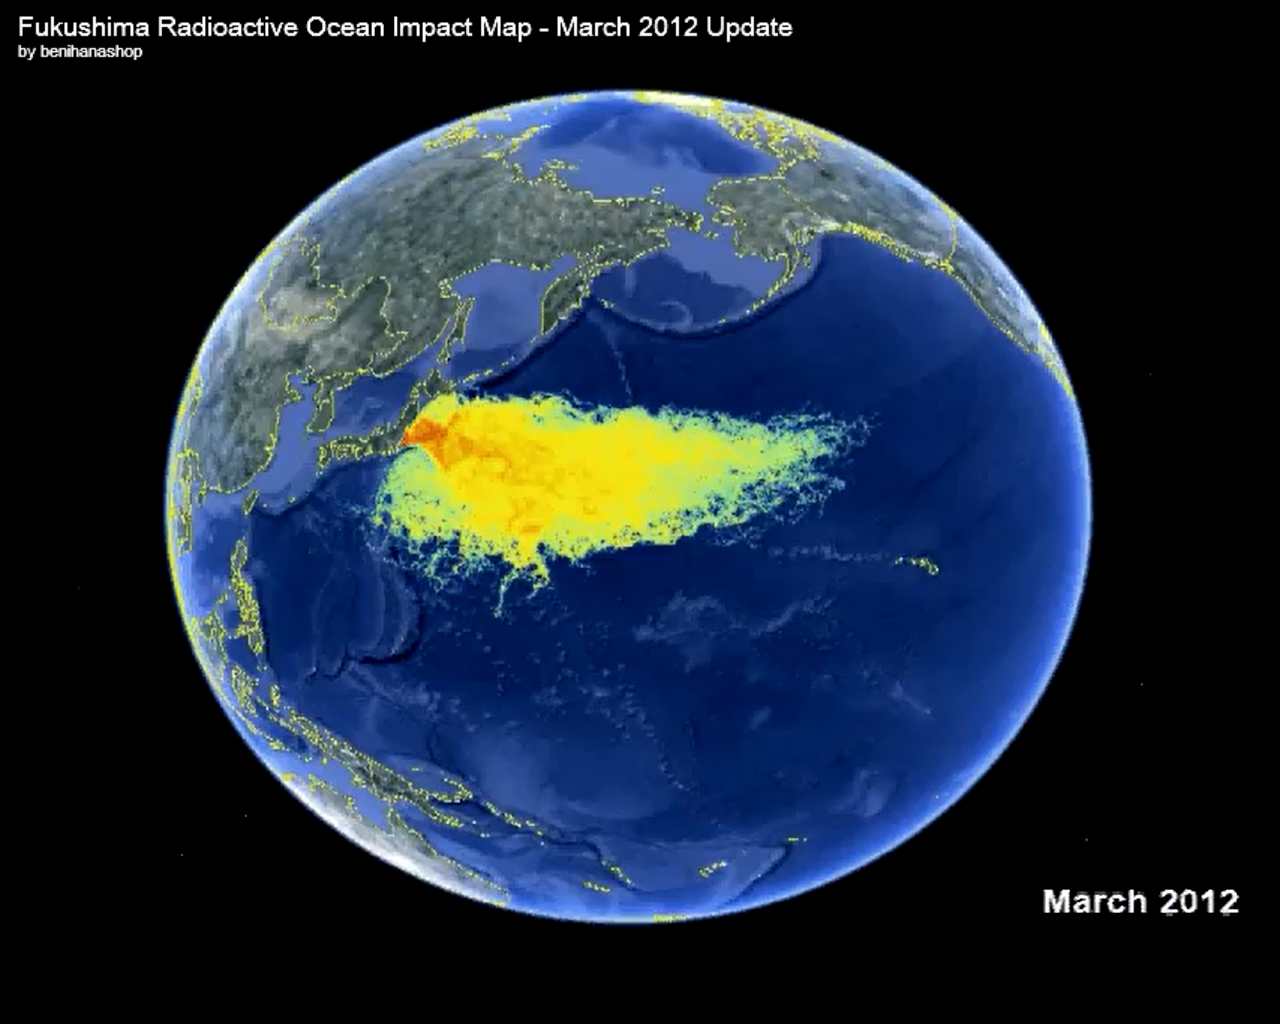 Fukushima Radiation Moving In Seawater Across Pacific Ocean According